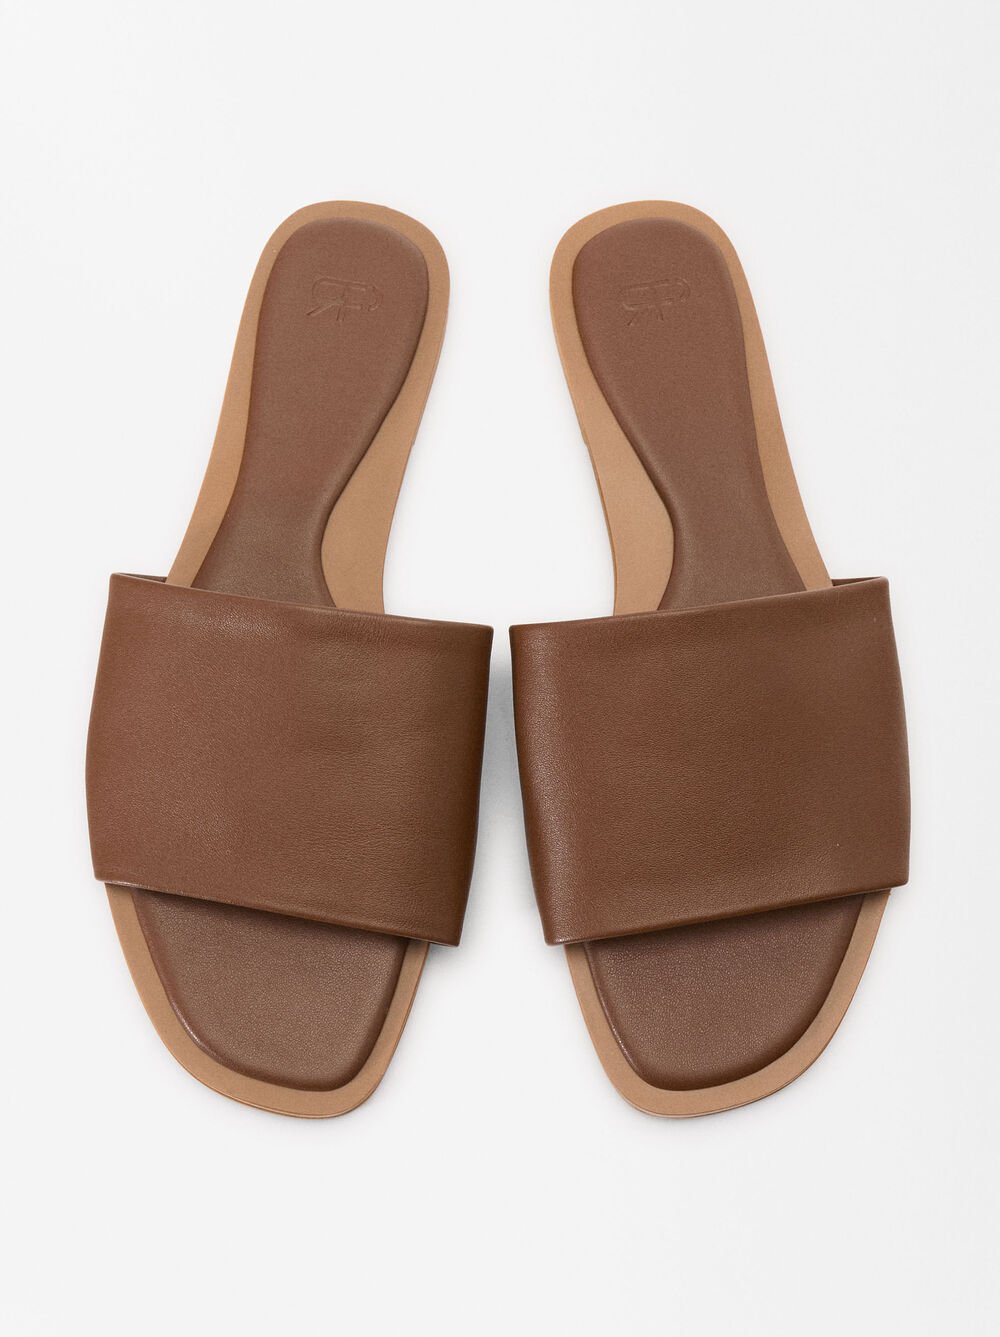 Napa Leather Sandals